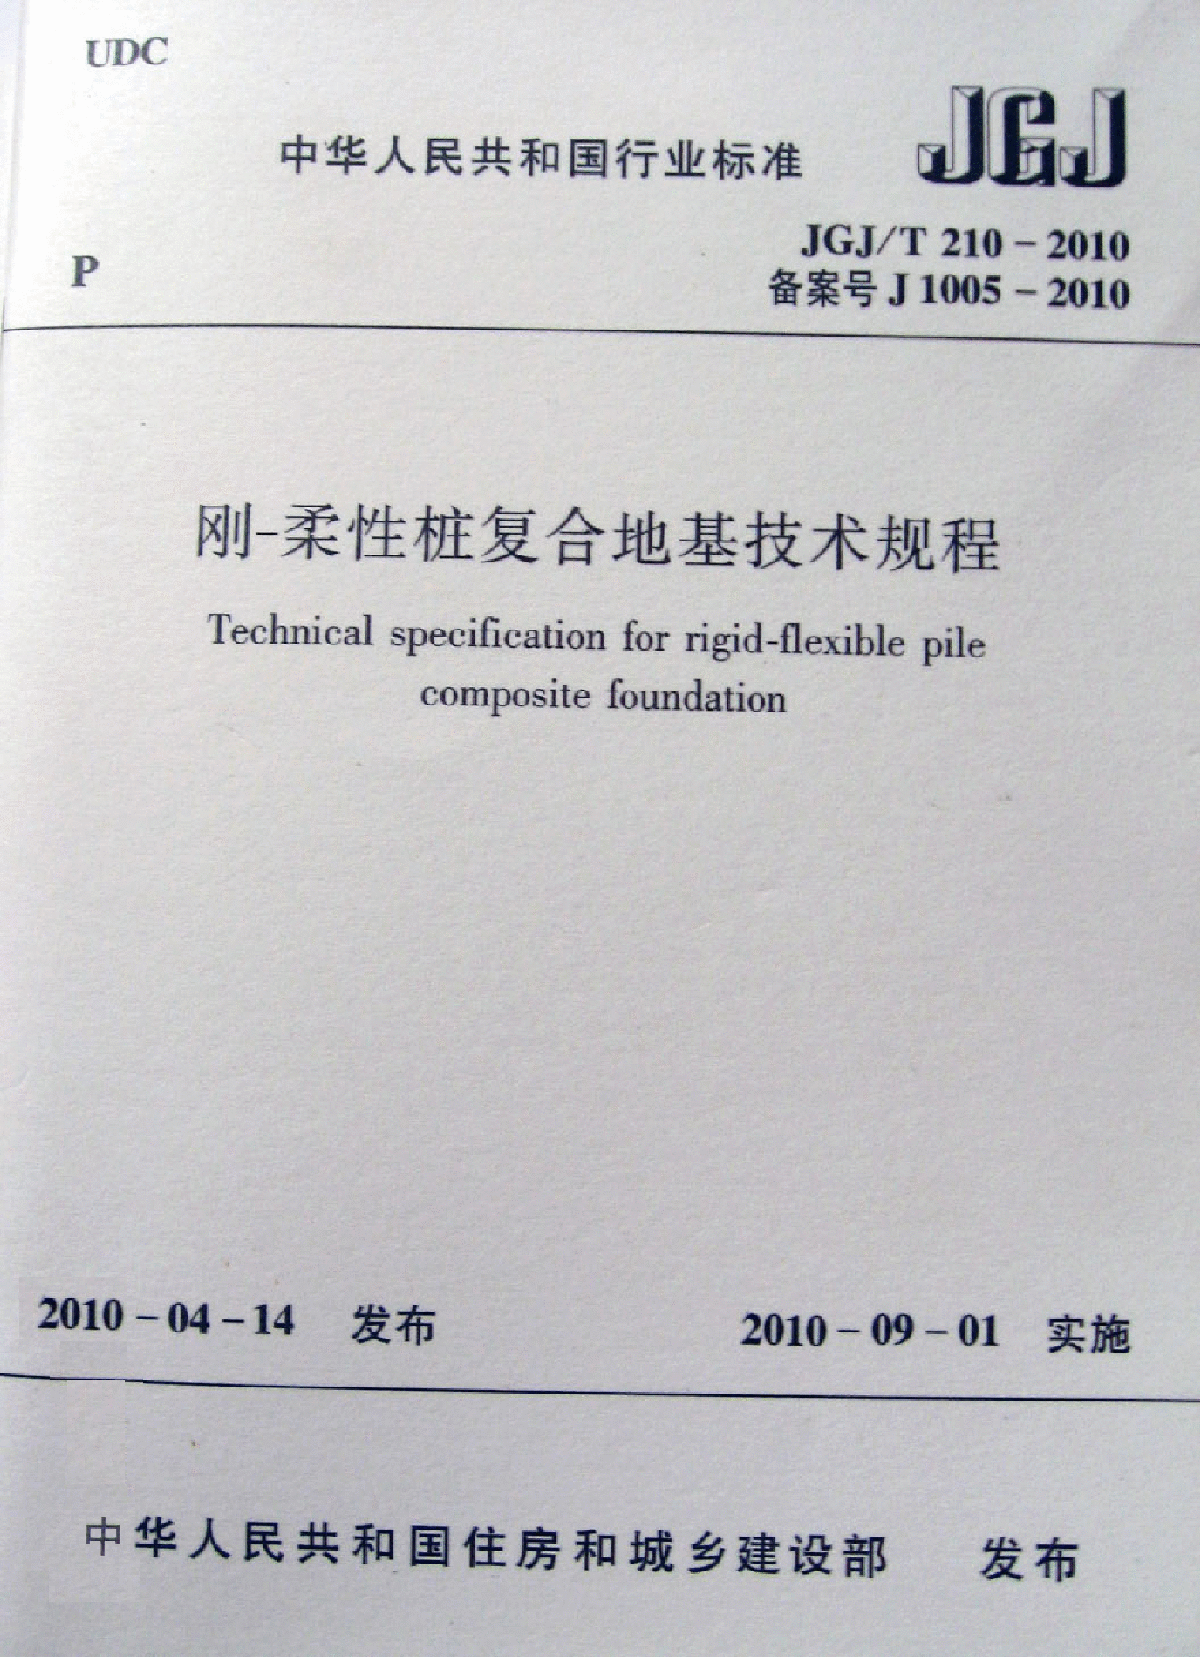 JGJ∕T 210-2010 刚-柔性桩复合地基技术规程